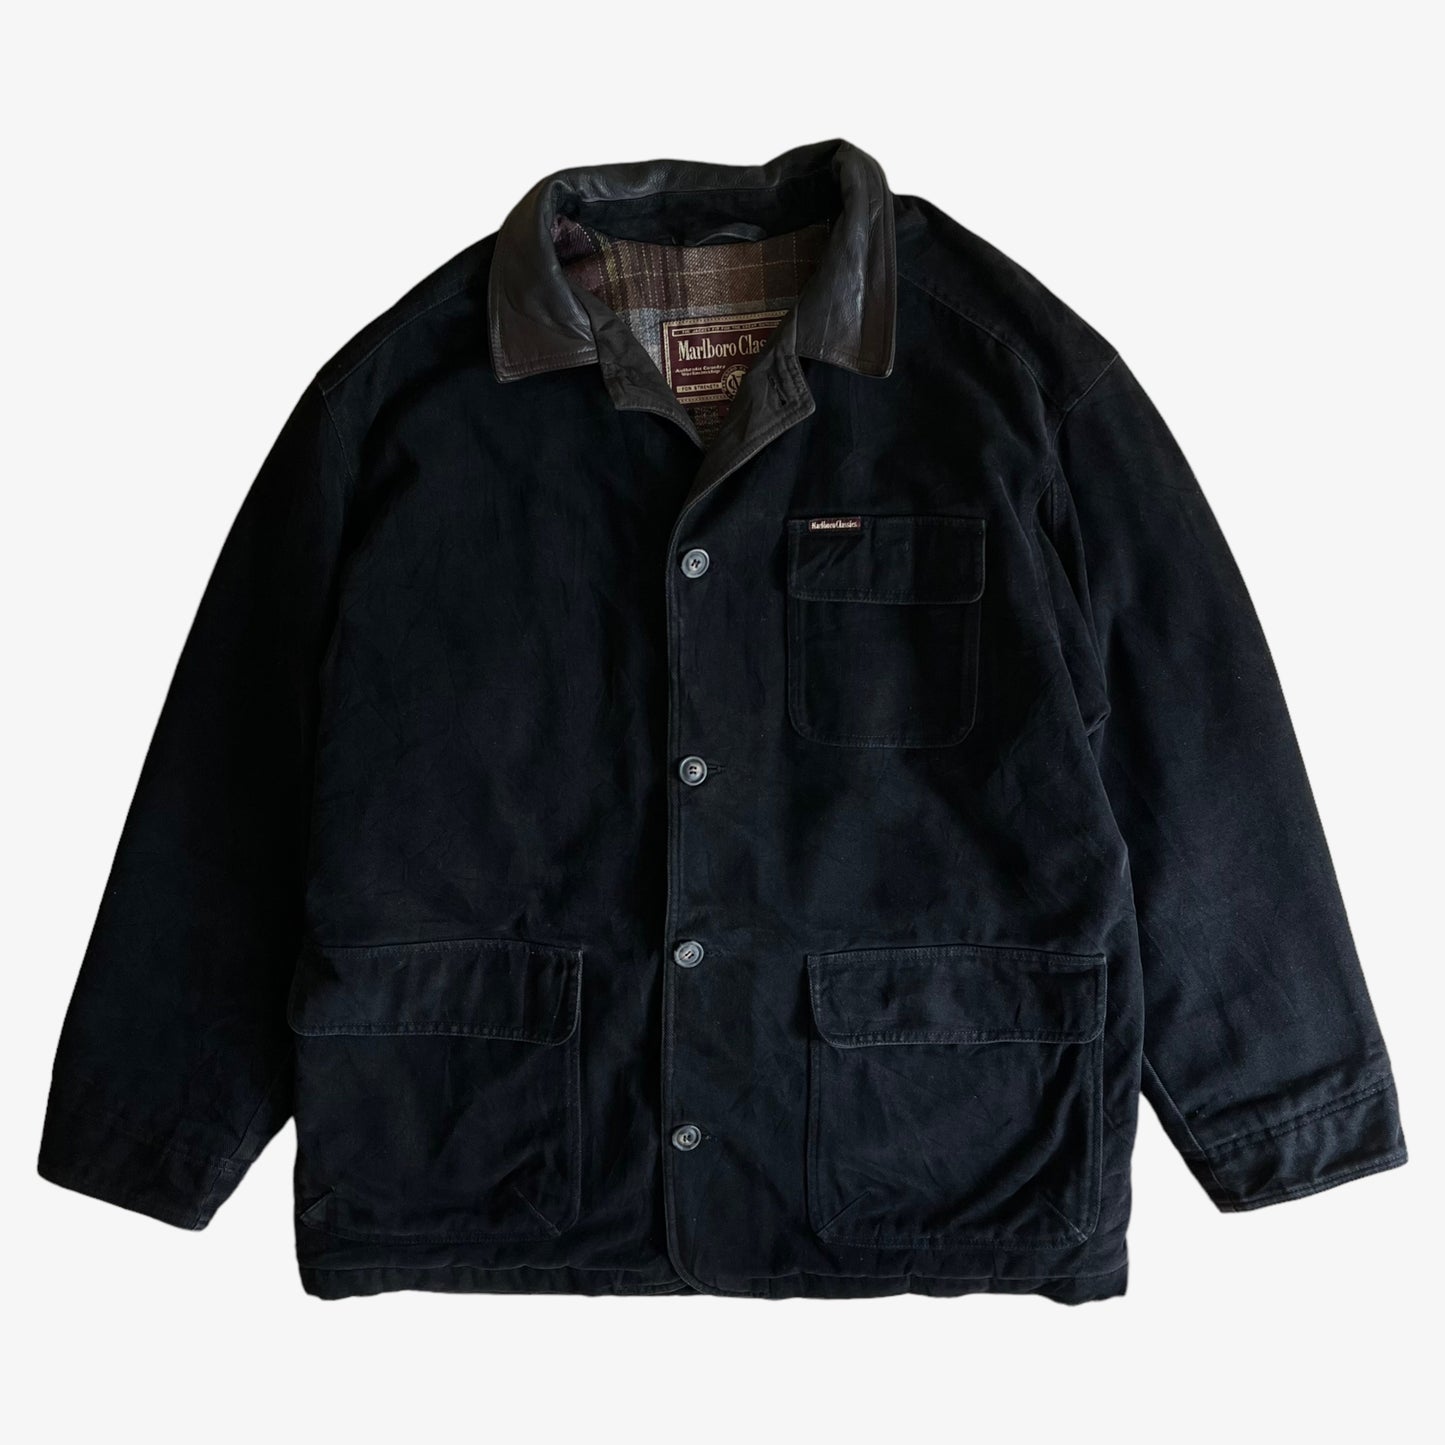 Vintage 90s Marlboro Classics Black Workwear Jacket With Leather Collar - Casspios Dream